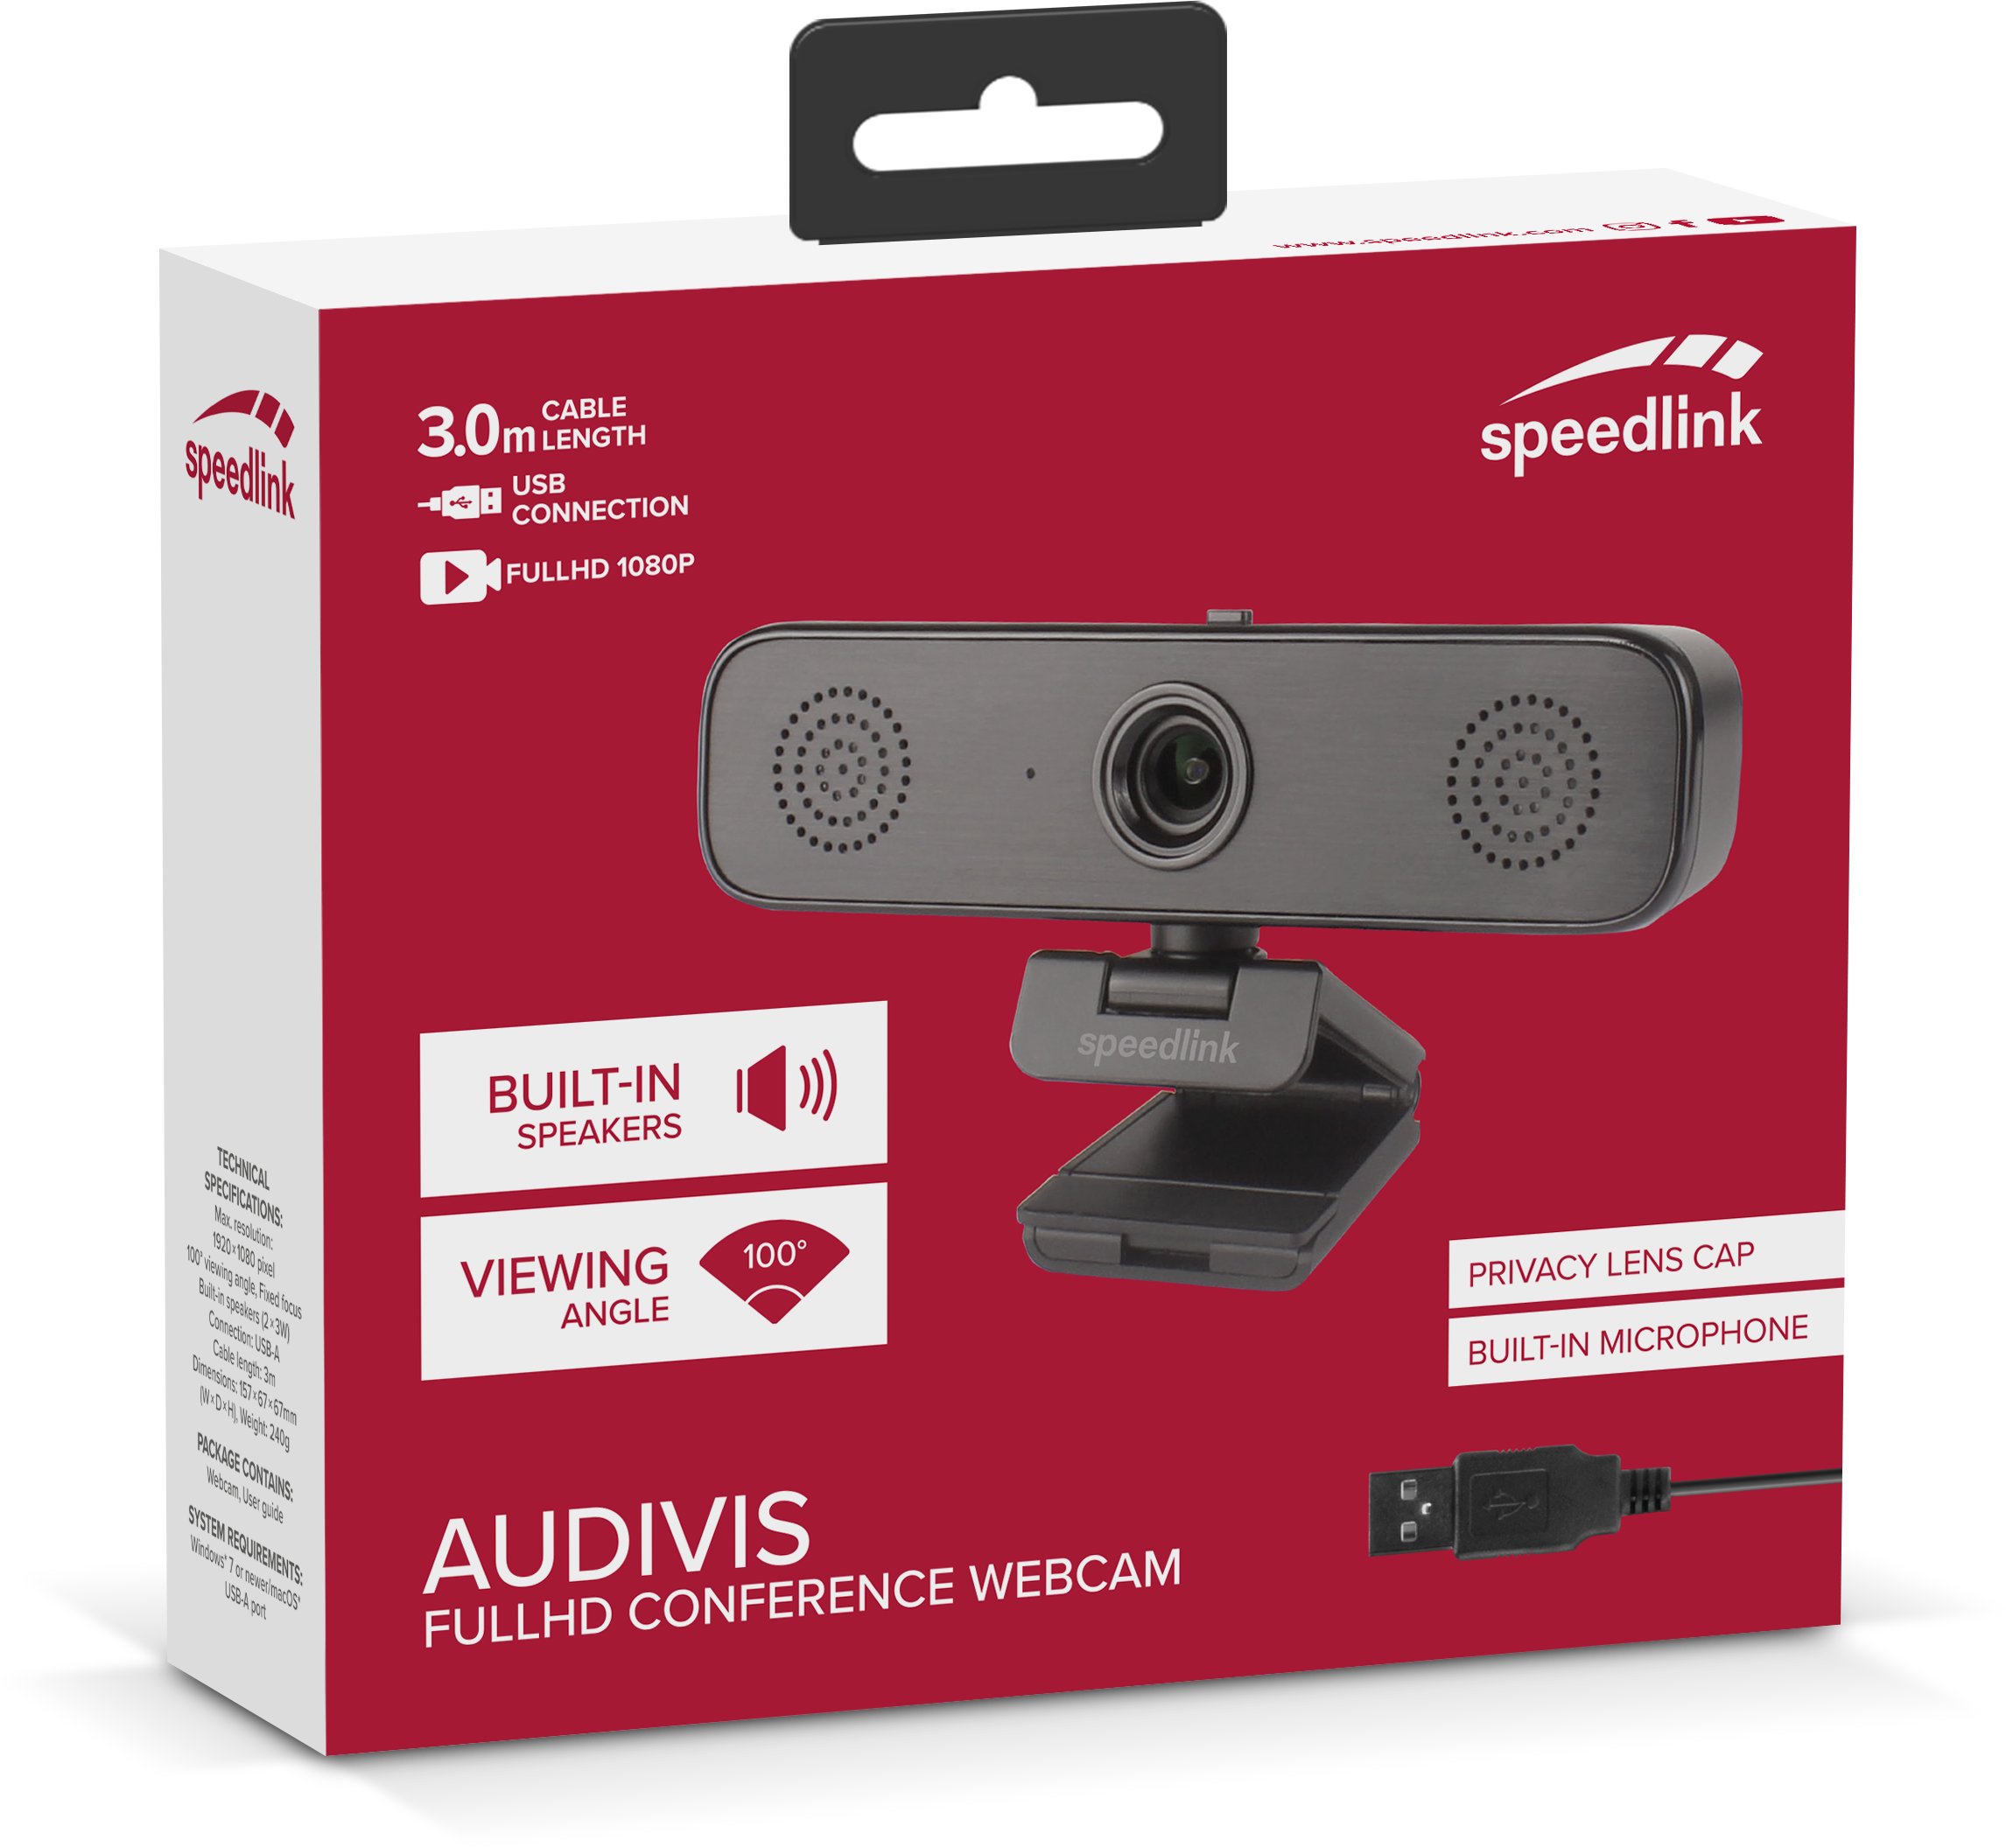 Вебкамера Speedlink AUDIVIS Conference - зображення 4